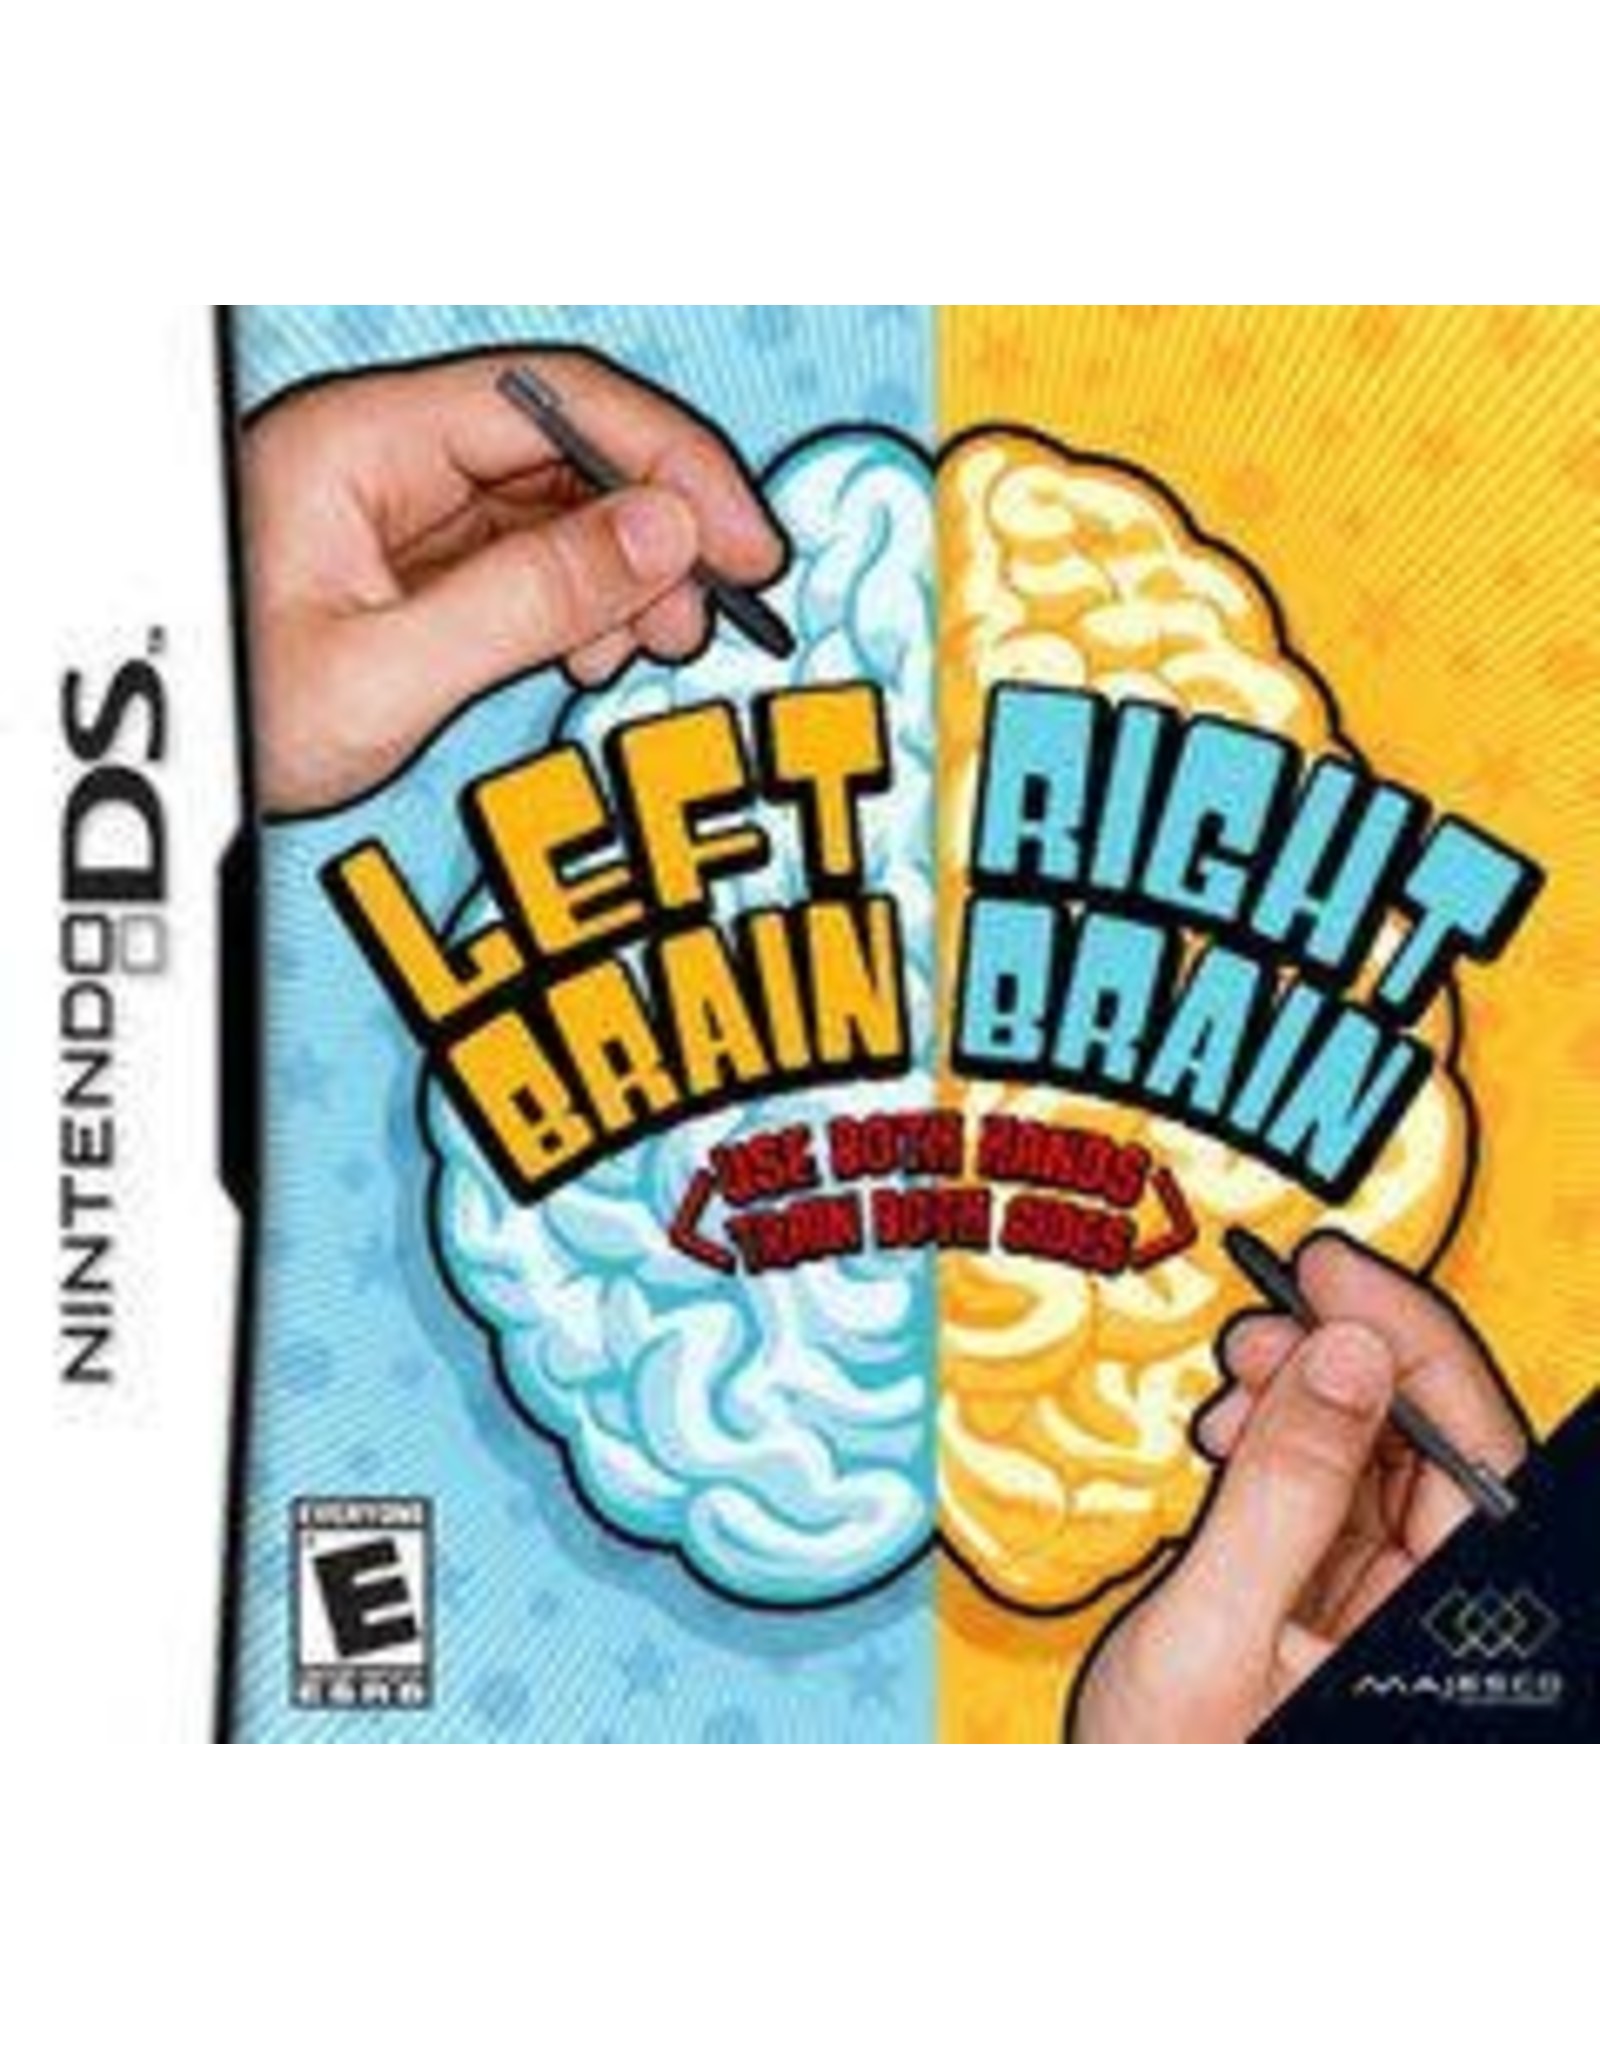 Nintendo DS Left Brain Right Brain (CiB)